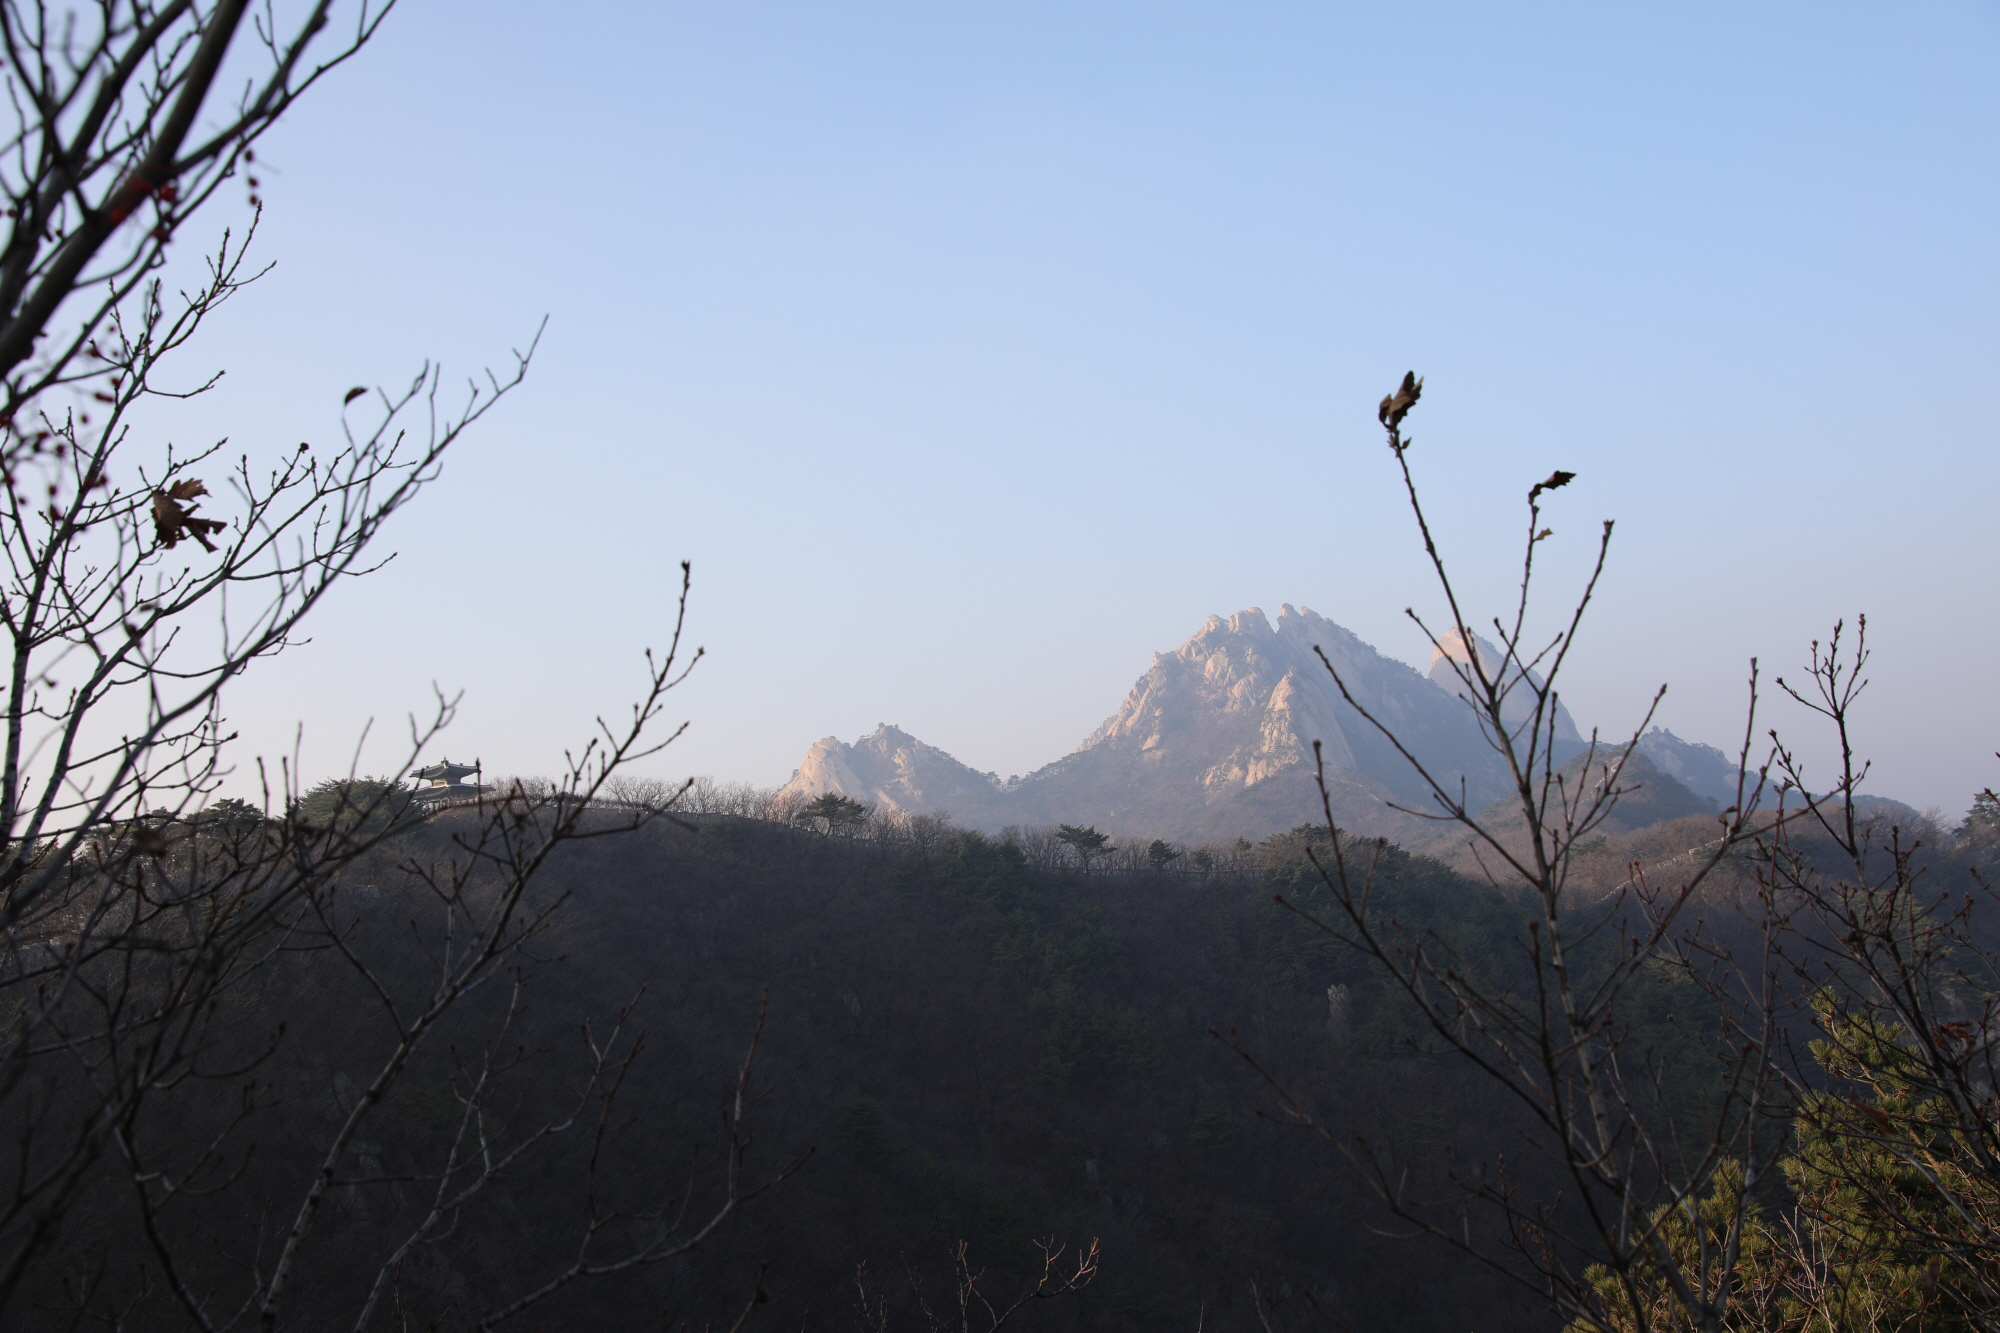 The Pride of Bukhansan Mountain, Bukhansanseong Fortress